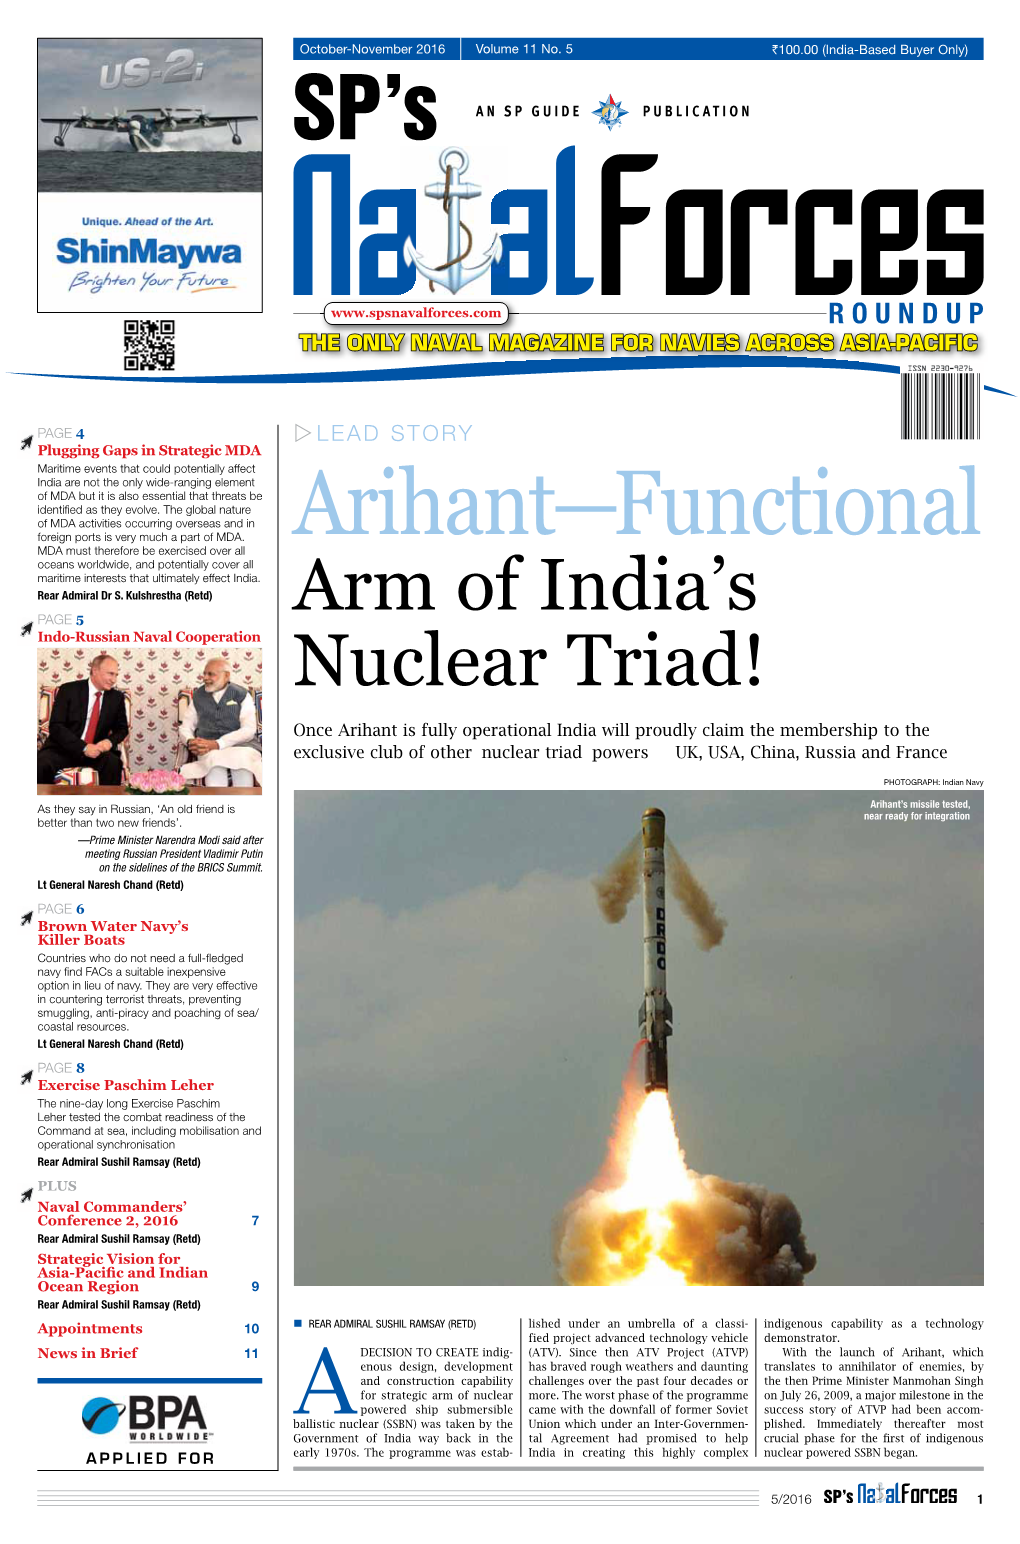 Arm of India's Nuclear Triad!